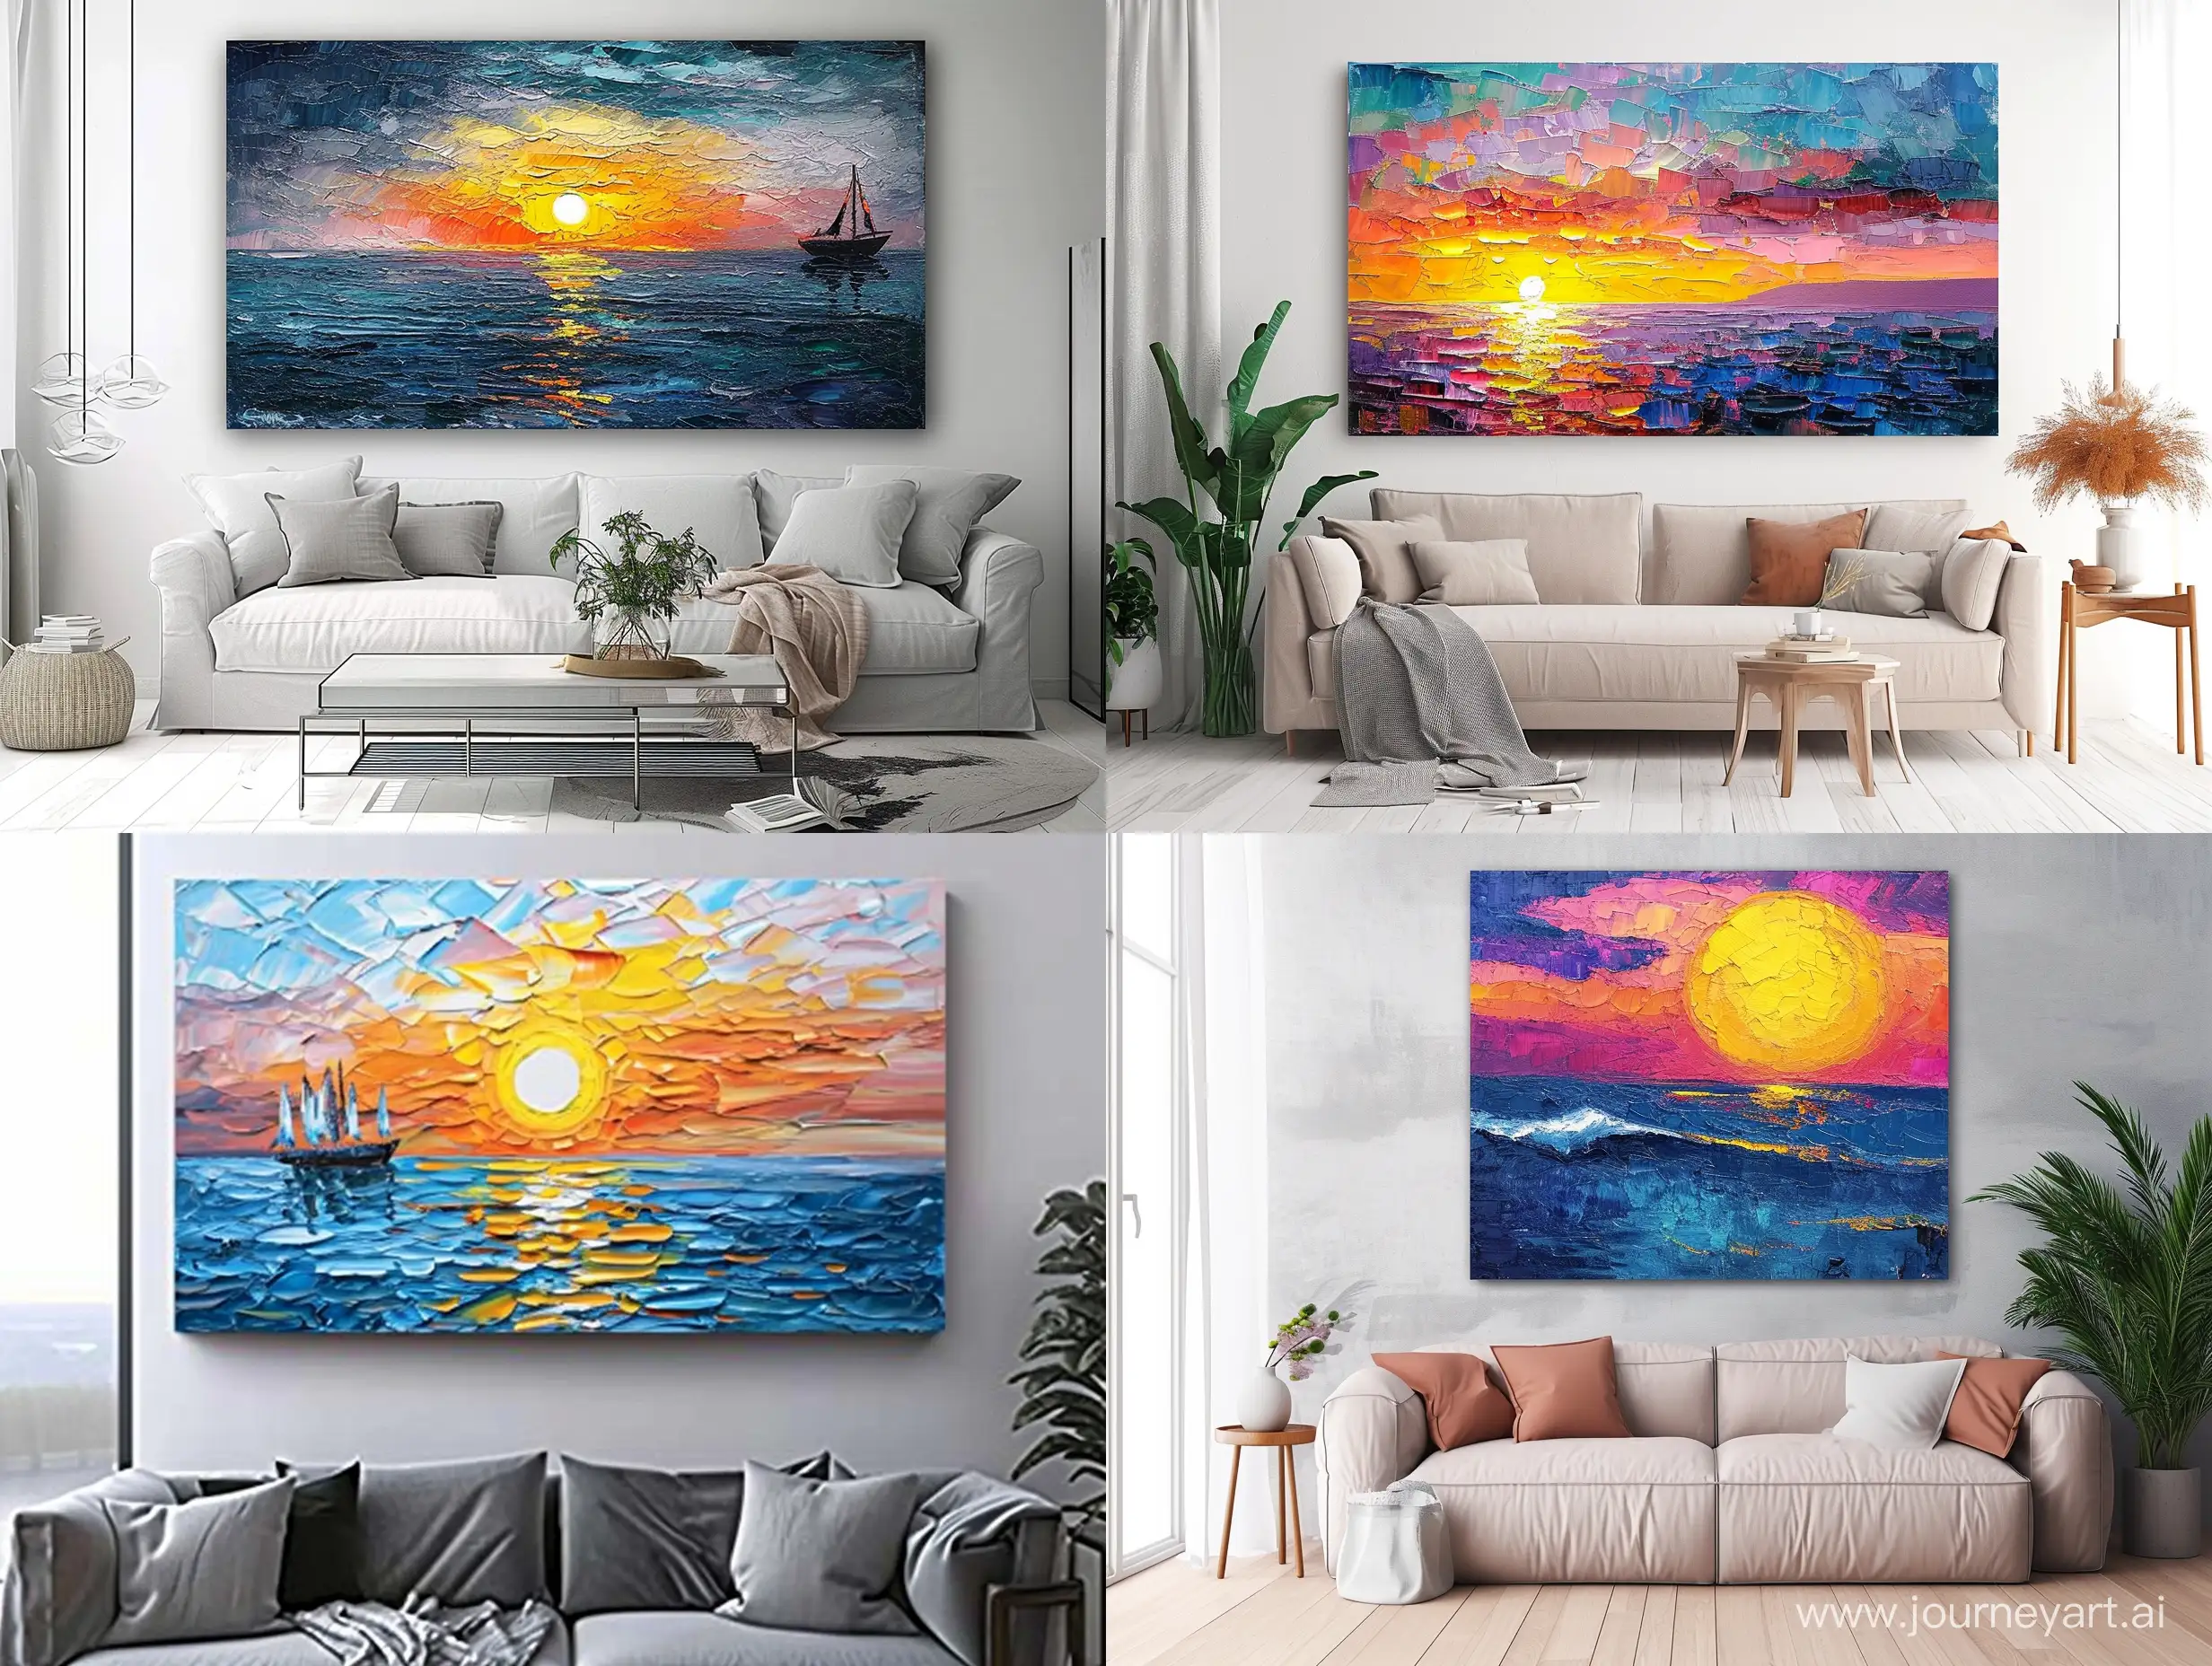 Daleno-Art-Seascape-Sunrise-HandPainted-Oil-Painting-for-Living-Room-Wall-Decor